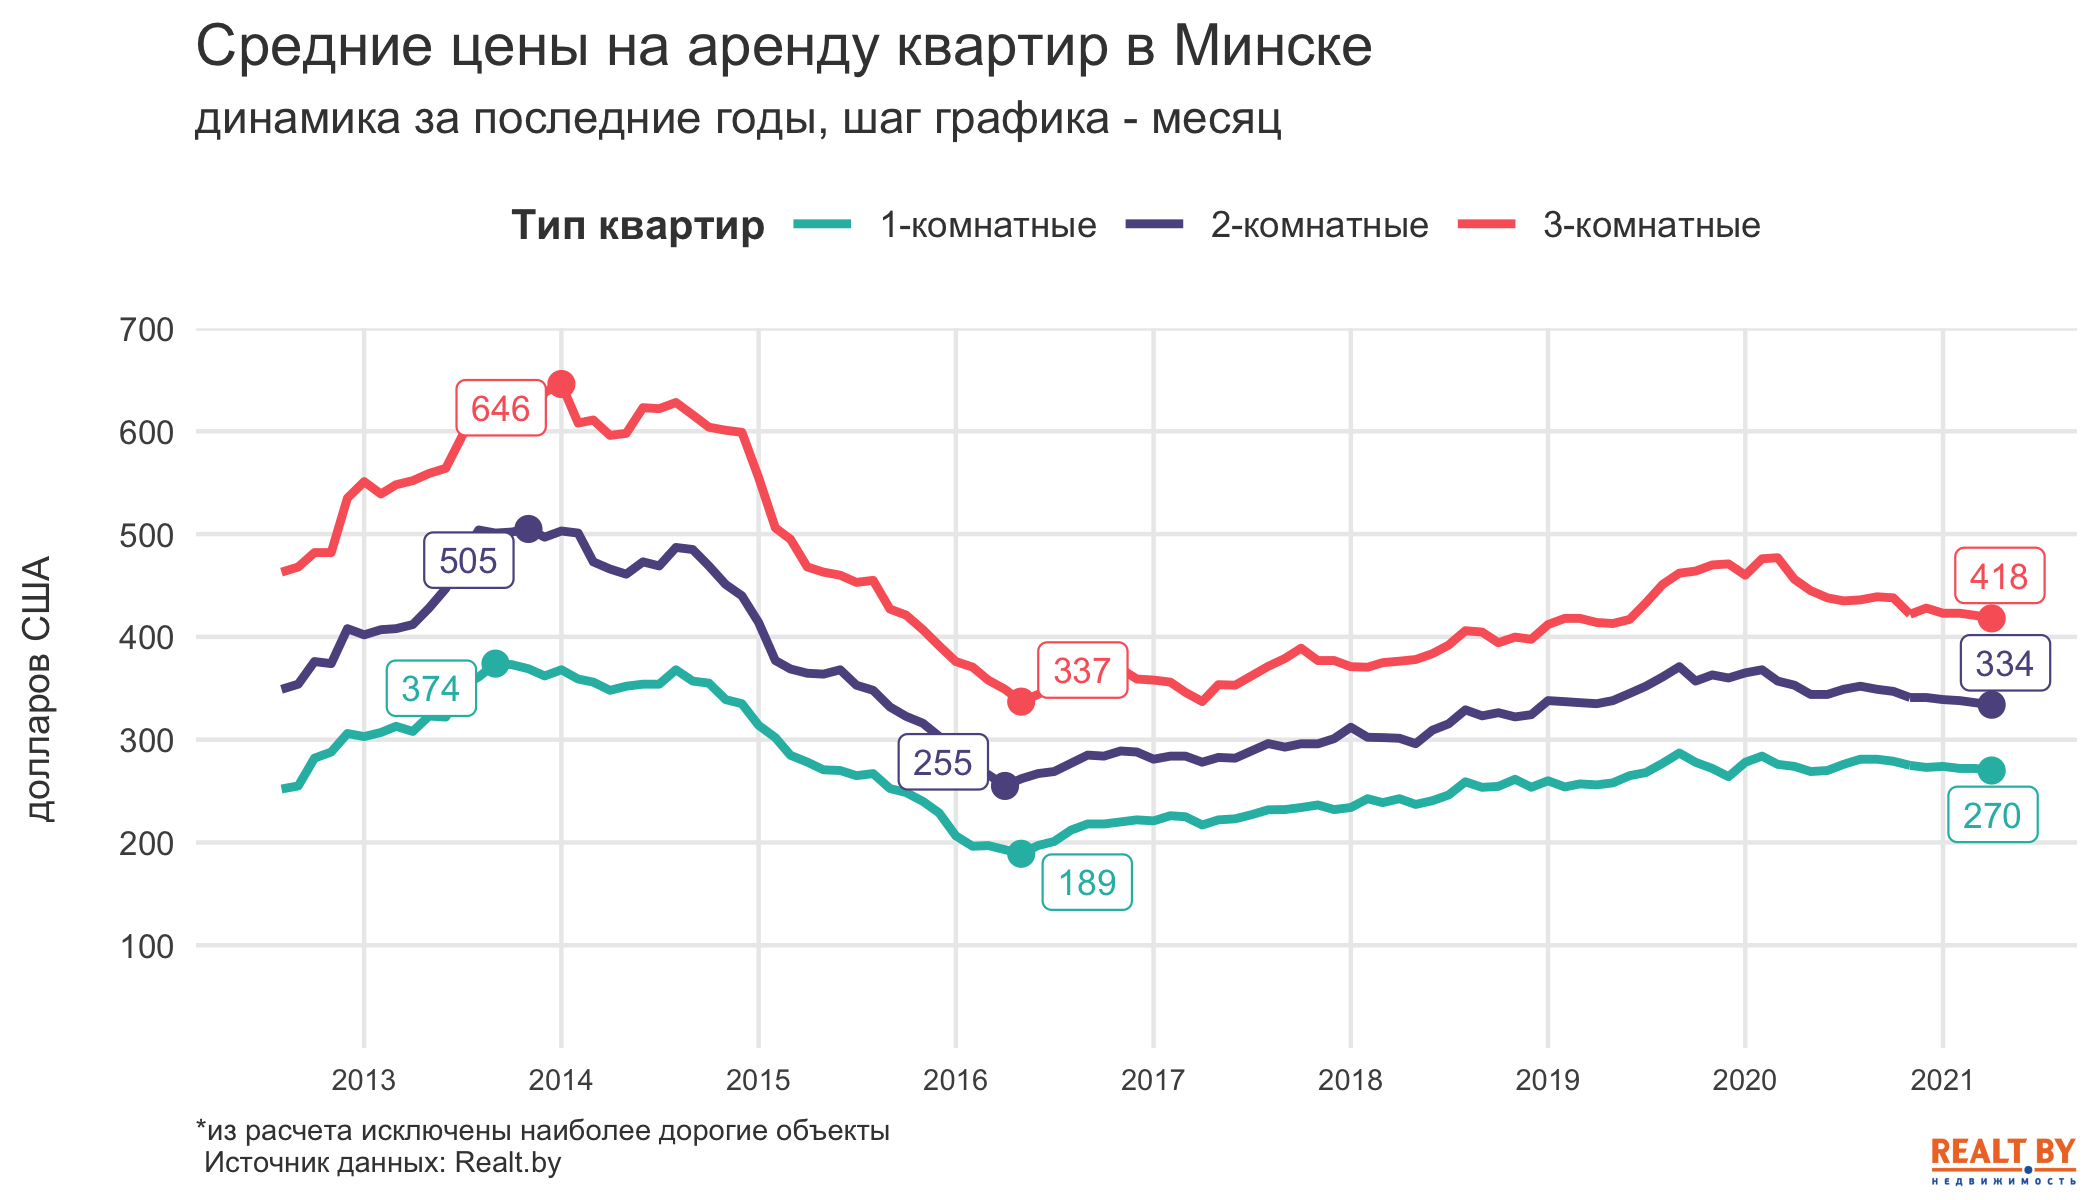 Цены на квартиры снизились. Обзор рынка аренды в Минске за апрель 2021 года